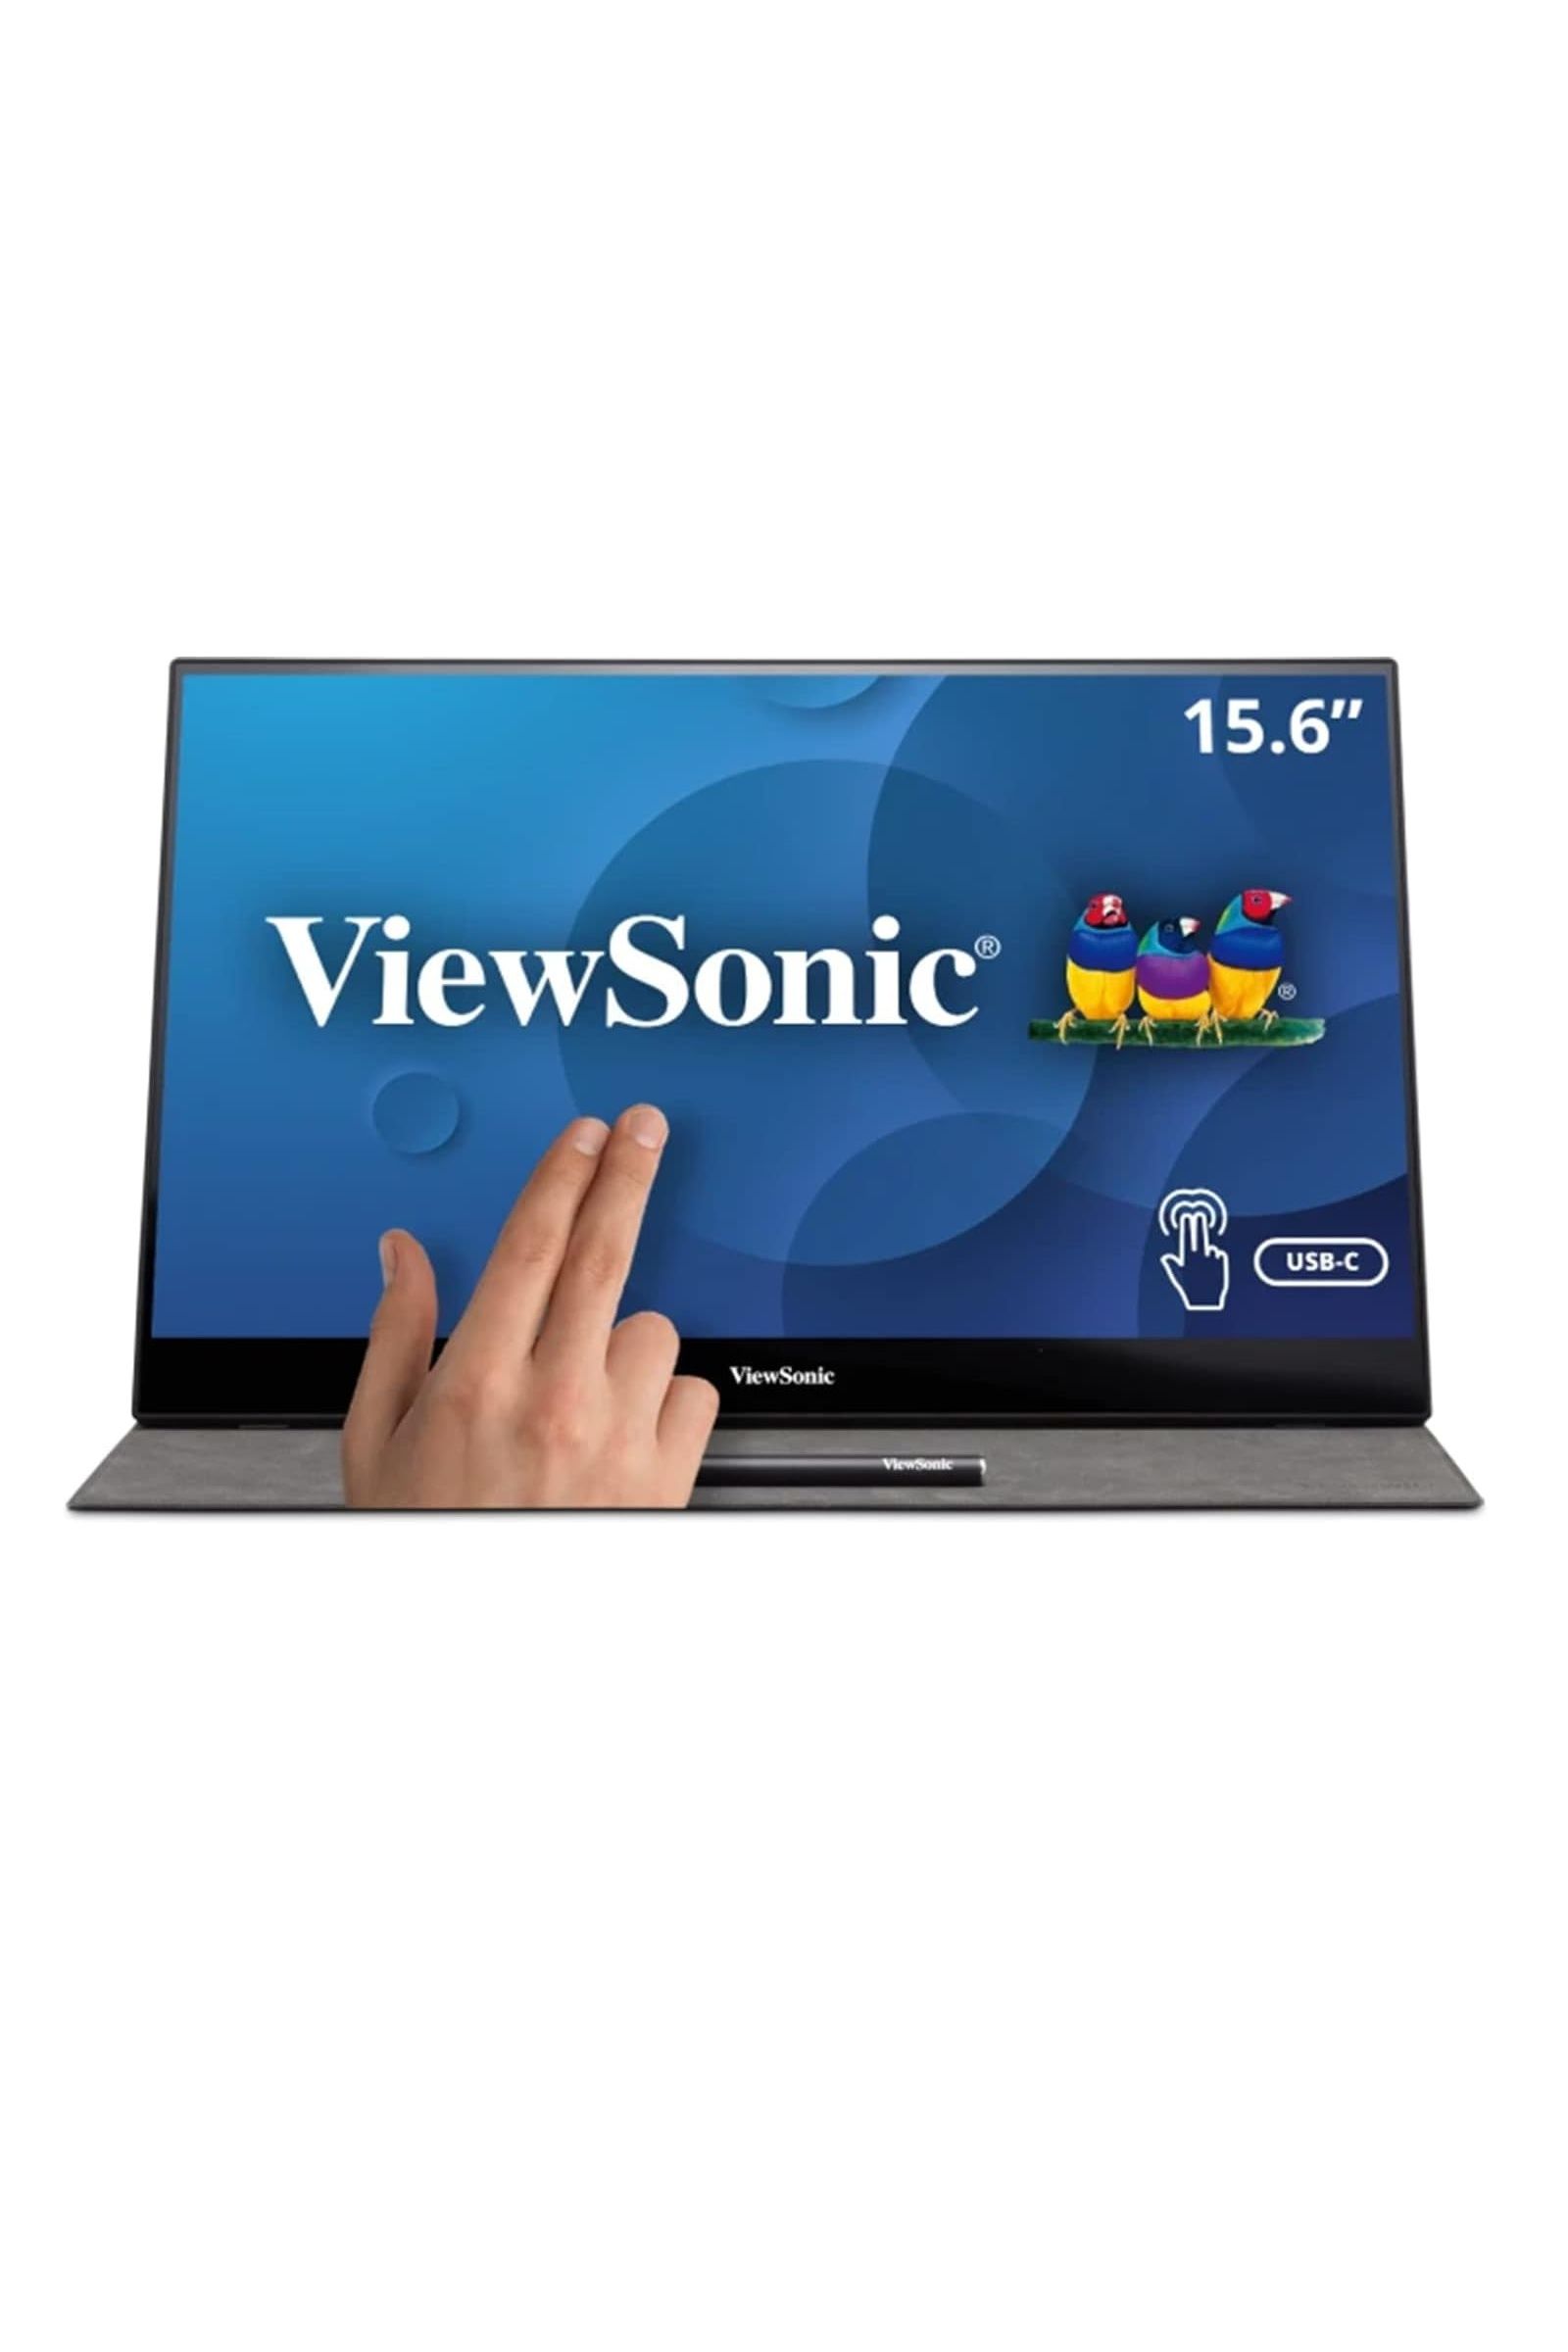 ViewSonic TD1655 1080p Touchscreen Monitor